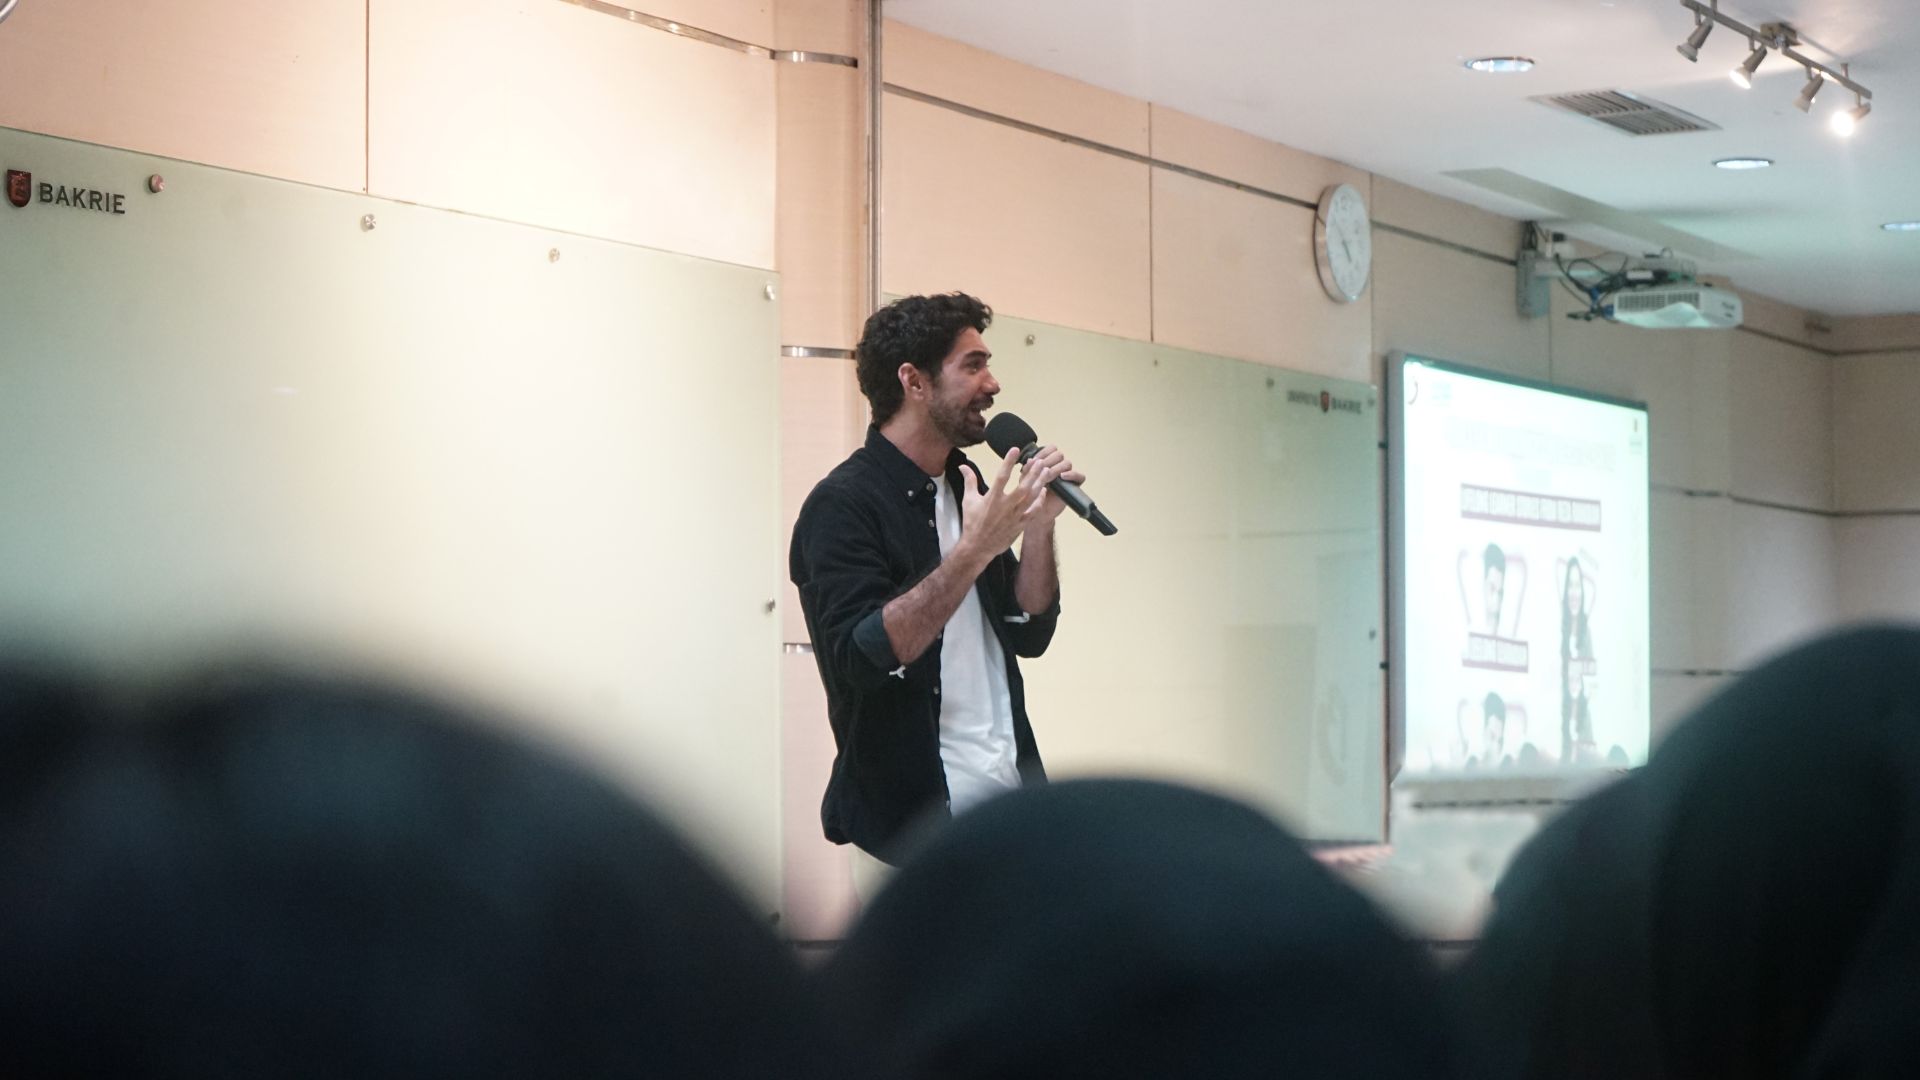 Mahasiswa Ilmu Komunikasi Universitas Bakrie Belajar Interpersonal Communication Bersama Reza Rahadian